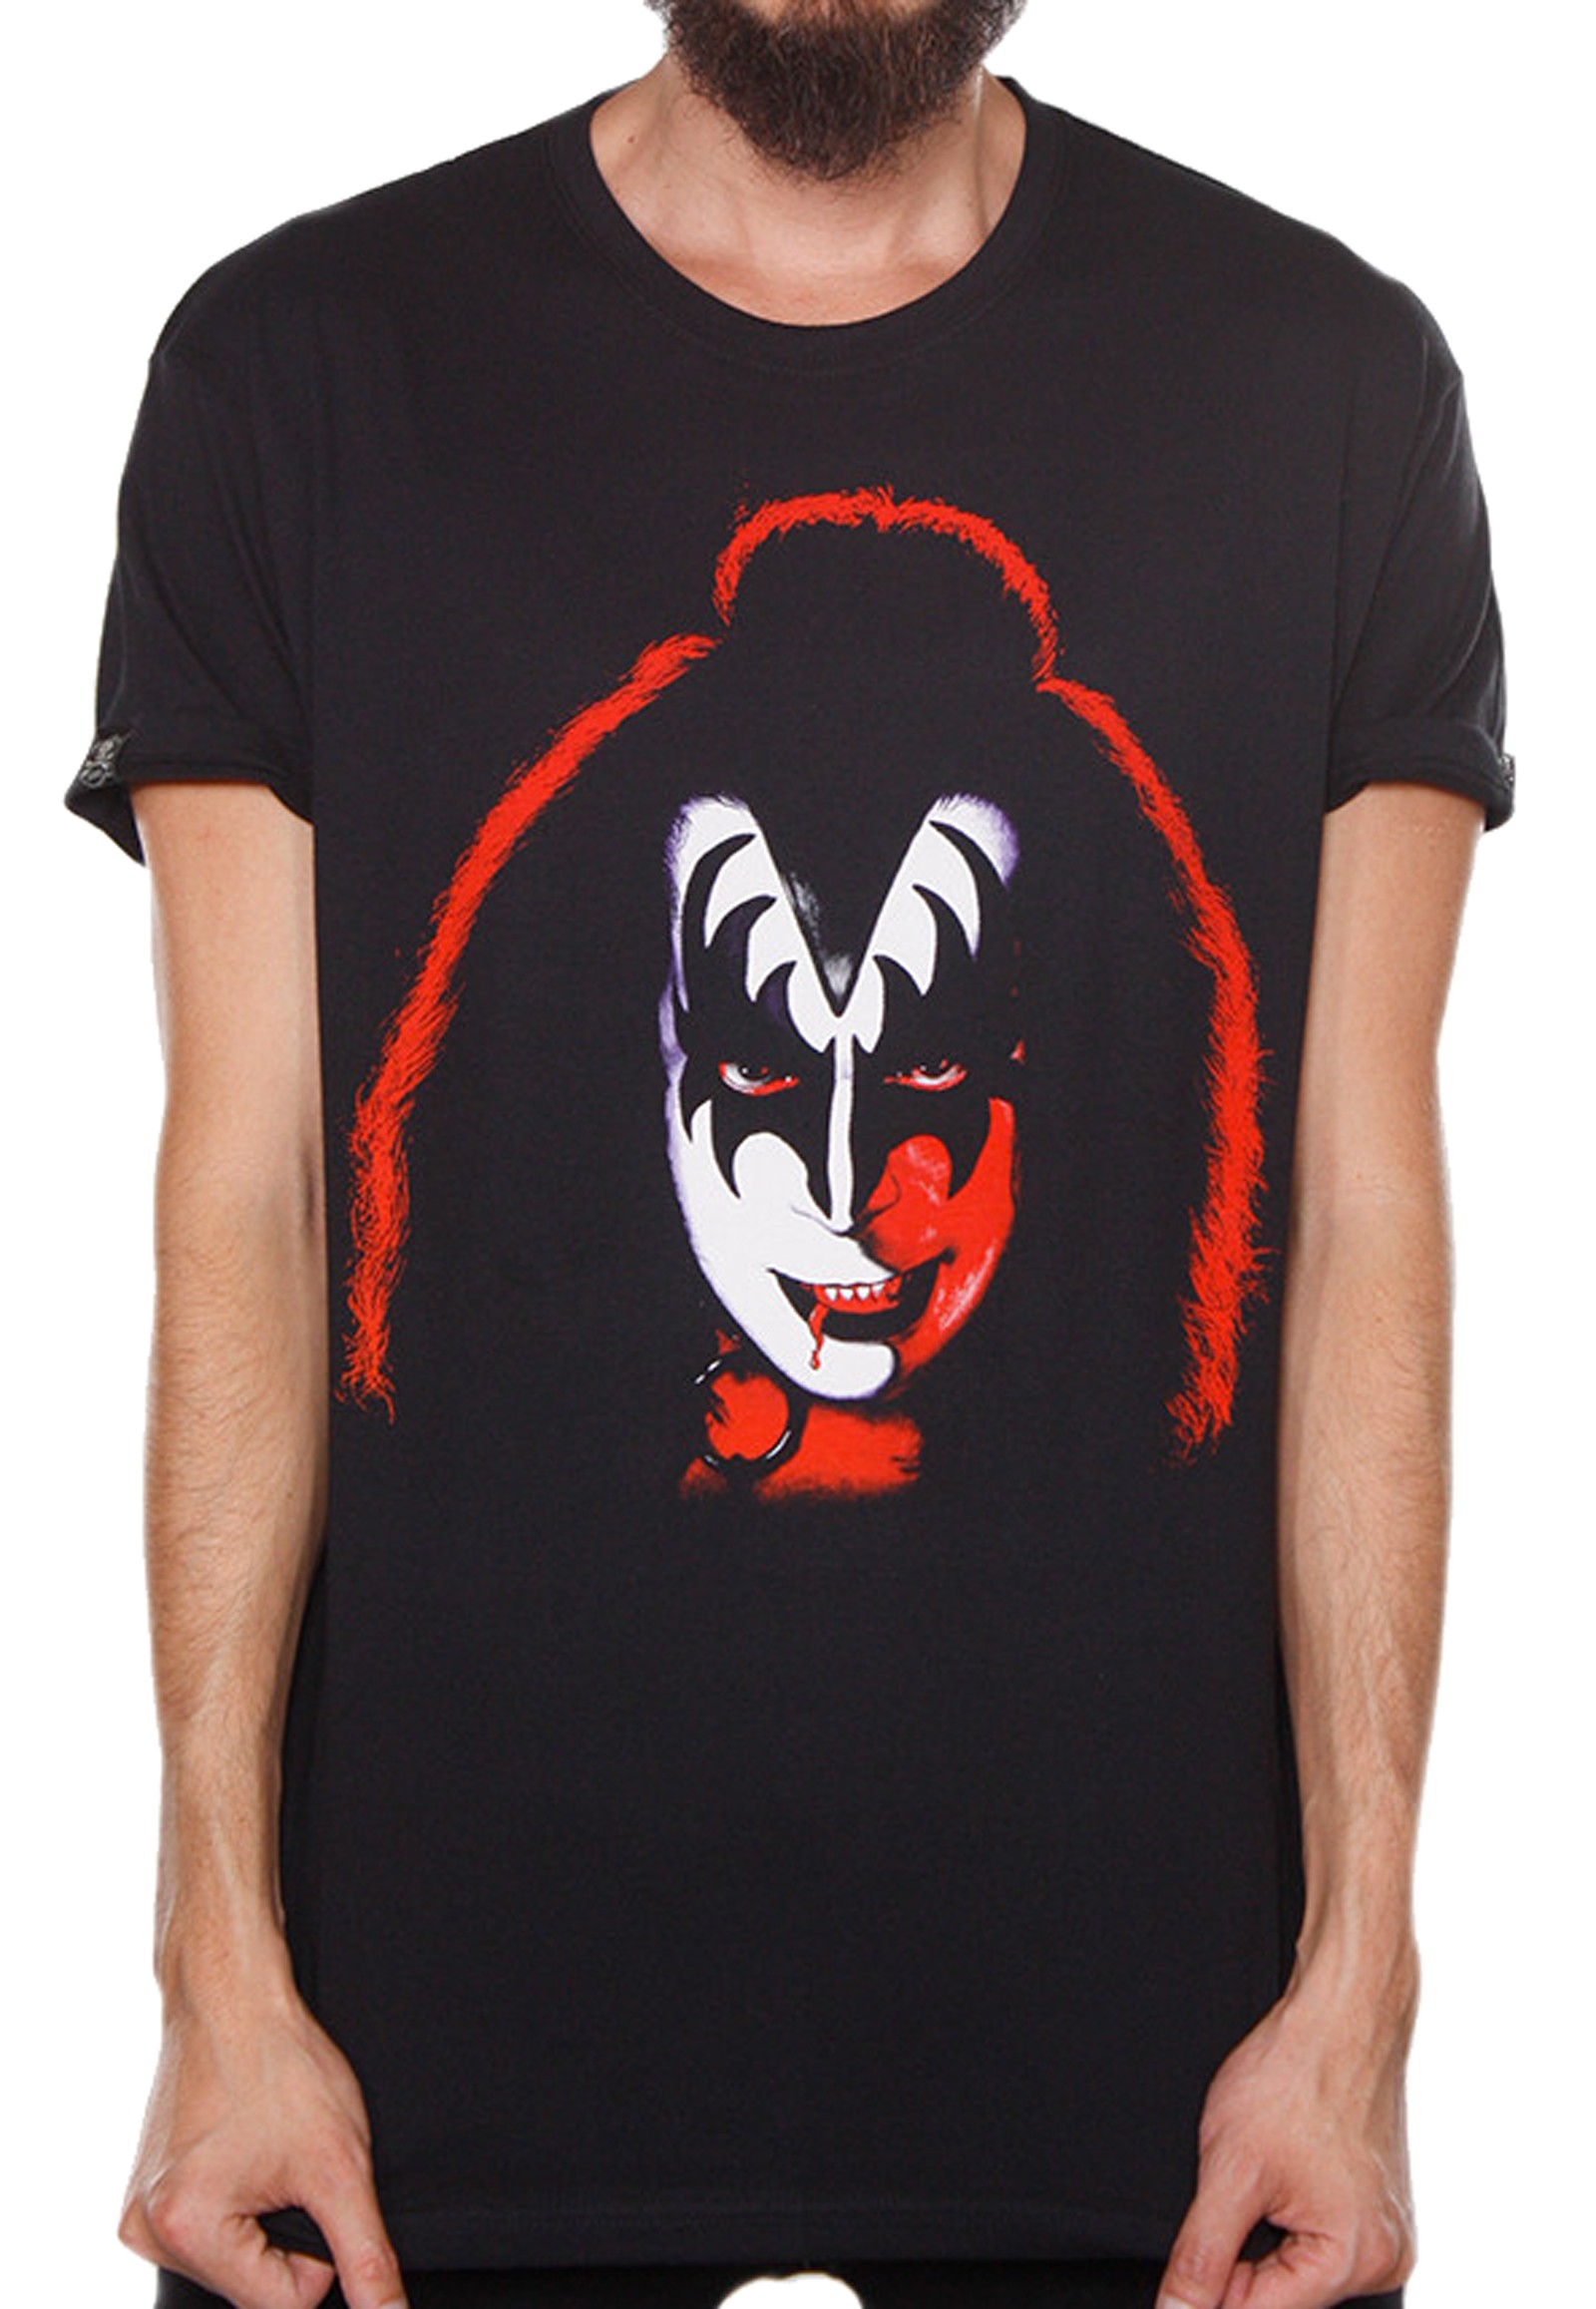 La Marca Del Diablo - Kiss Gene Simmons Solo Album T-Shirt